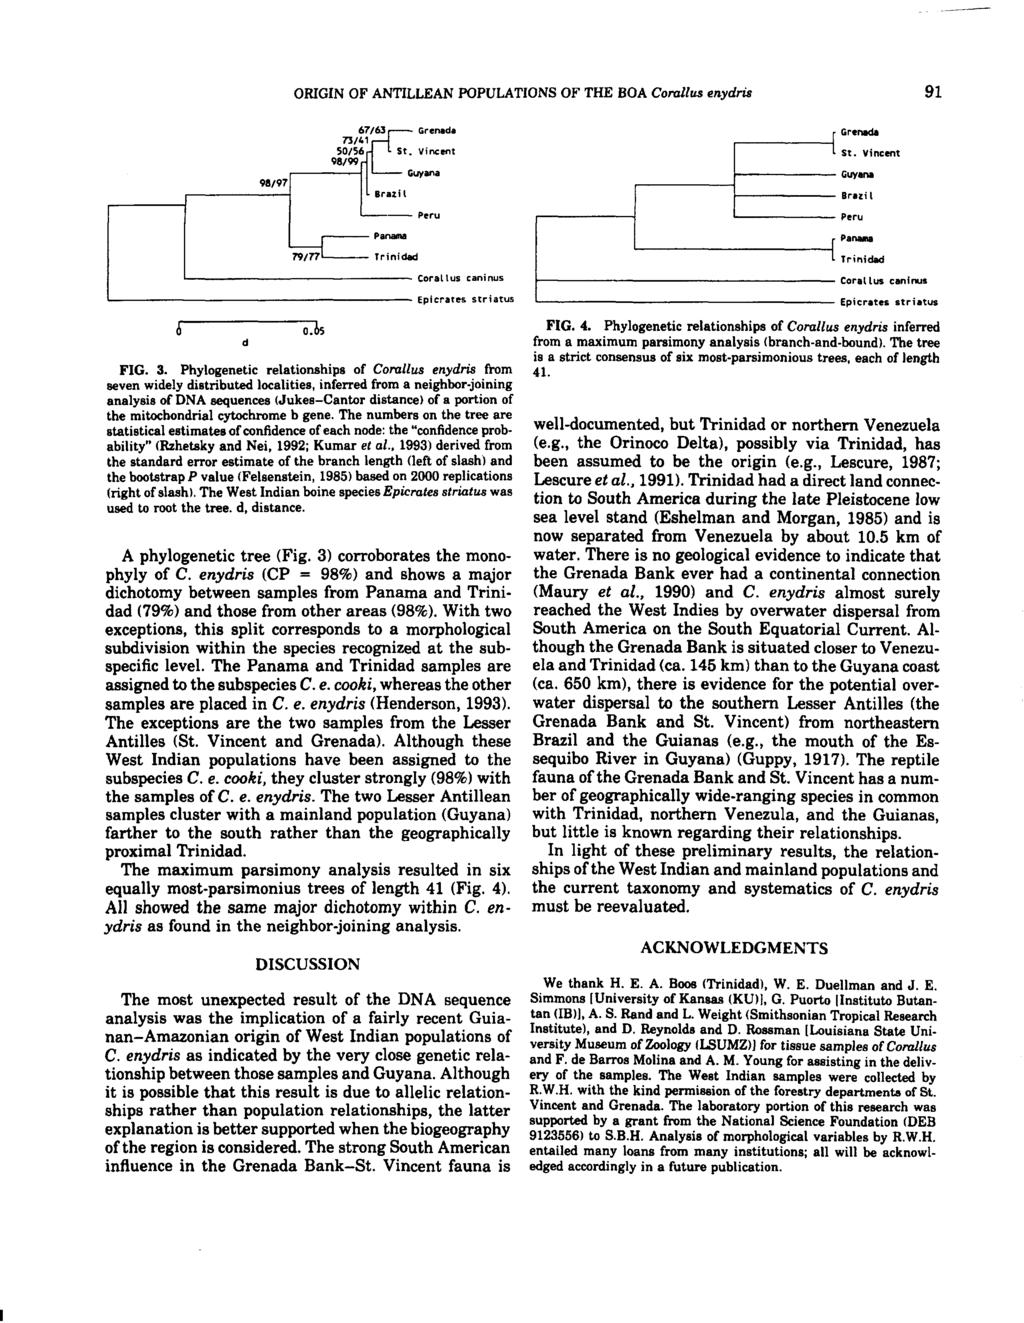 ORIGIN OF ANTILLEAN POPULATIONS OF THE BOA Corallus enydris 91 r GreNlda L St. Vincent 98/97 - Peru Panama Trinidad '-------_- Corallu5 caninus \-..---------------- Epicrates striatus d o.bs FIG. 3.